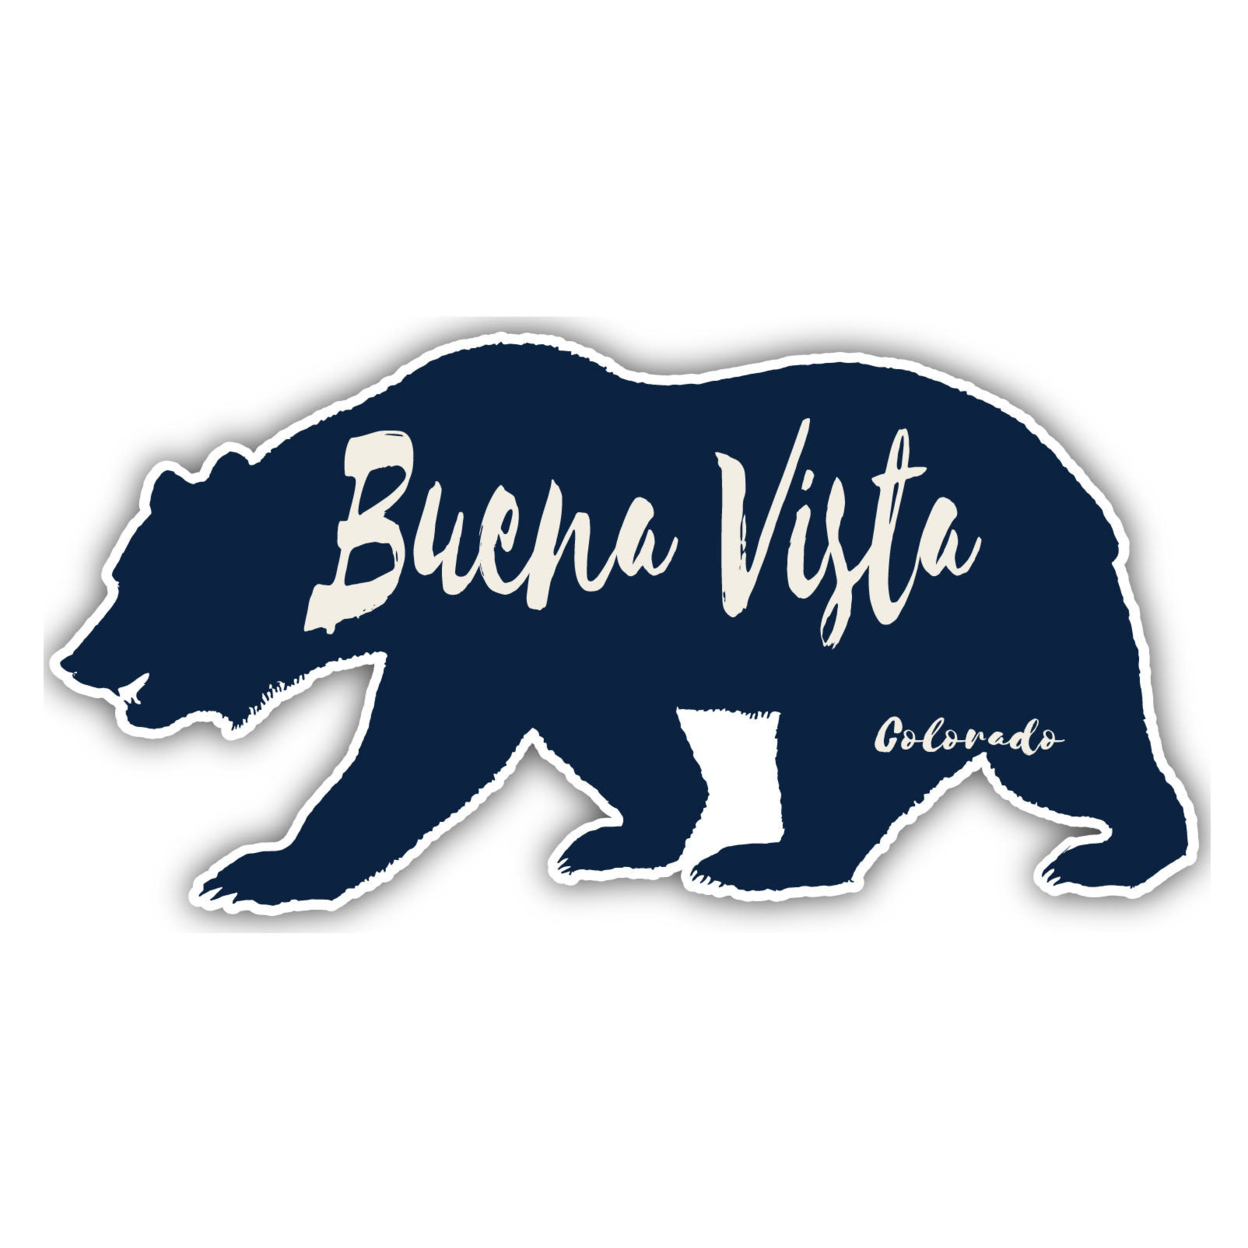 Buena Vista Colorado Souvenir Decorative Stickers (Choose Theme And Size) - Single Unit, 10-Inch, Bear